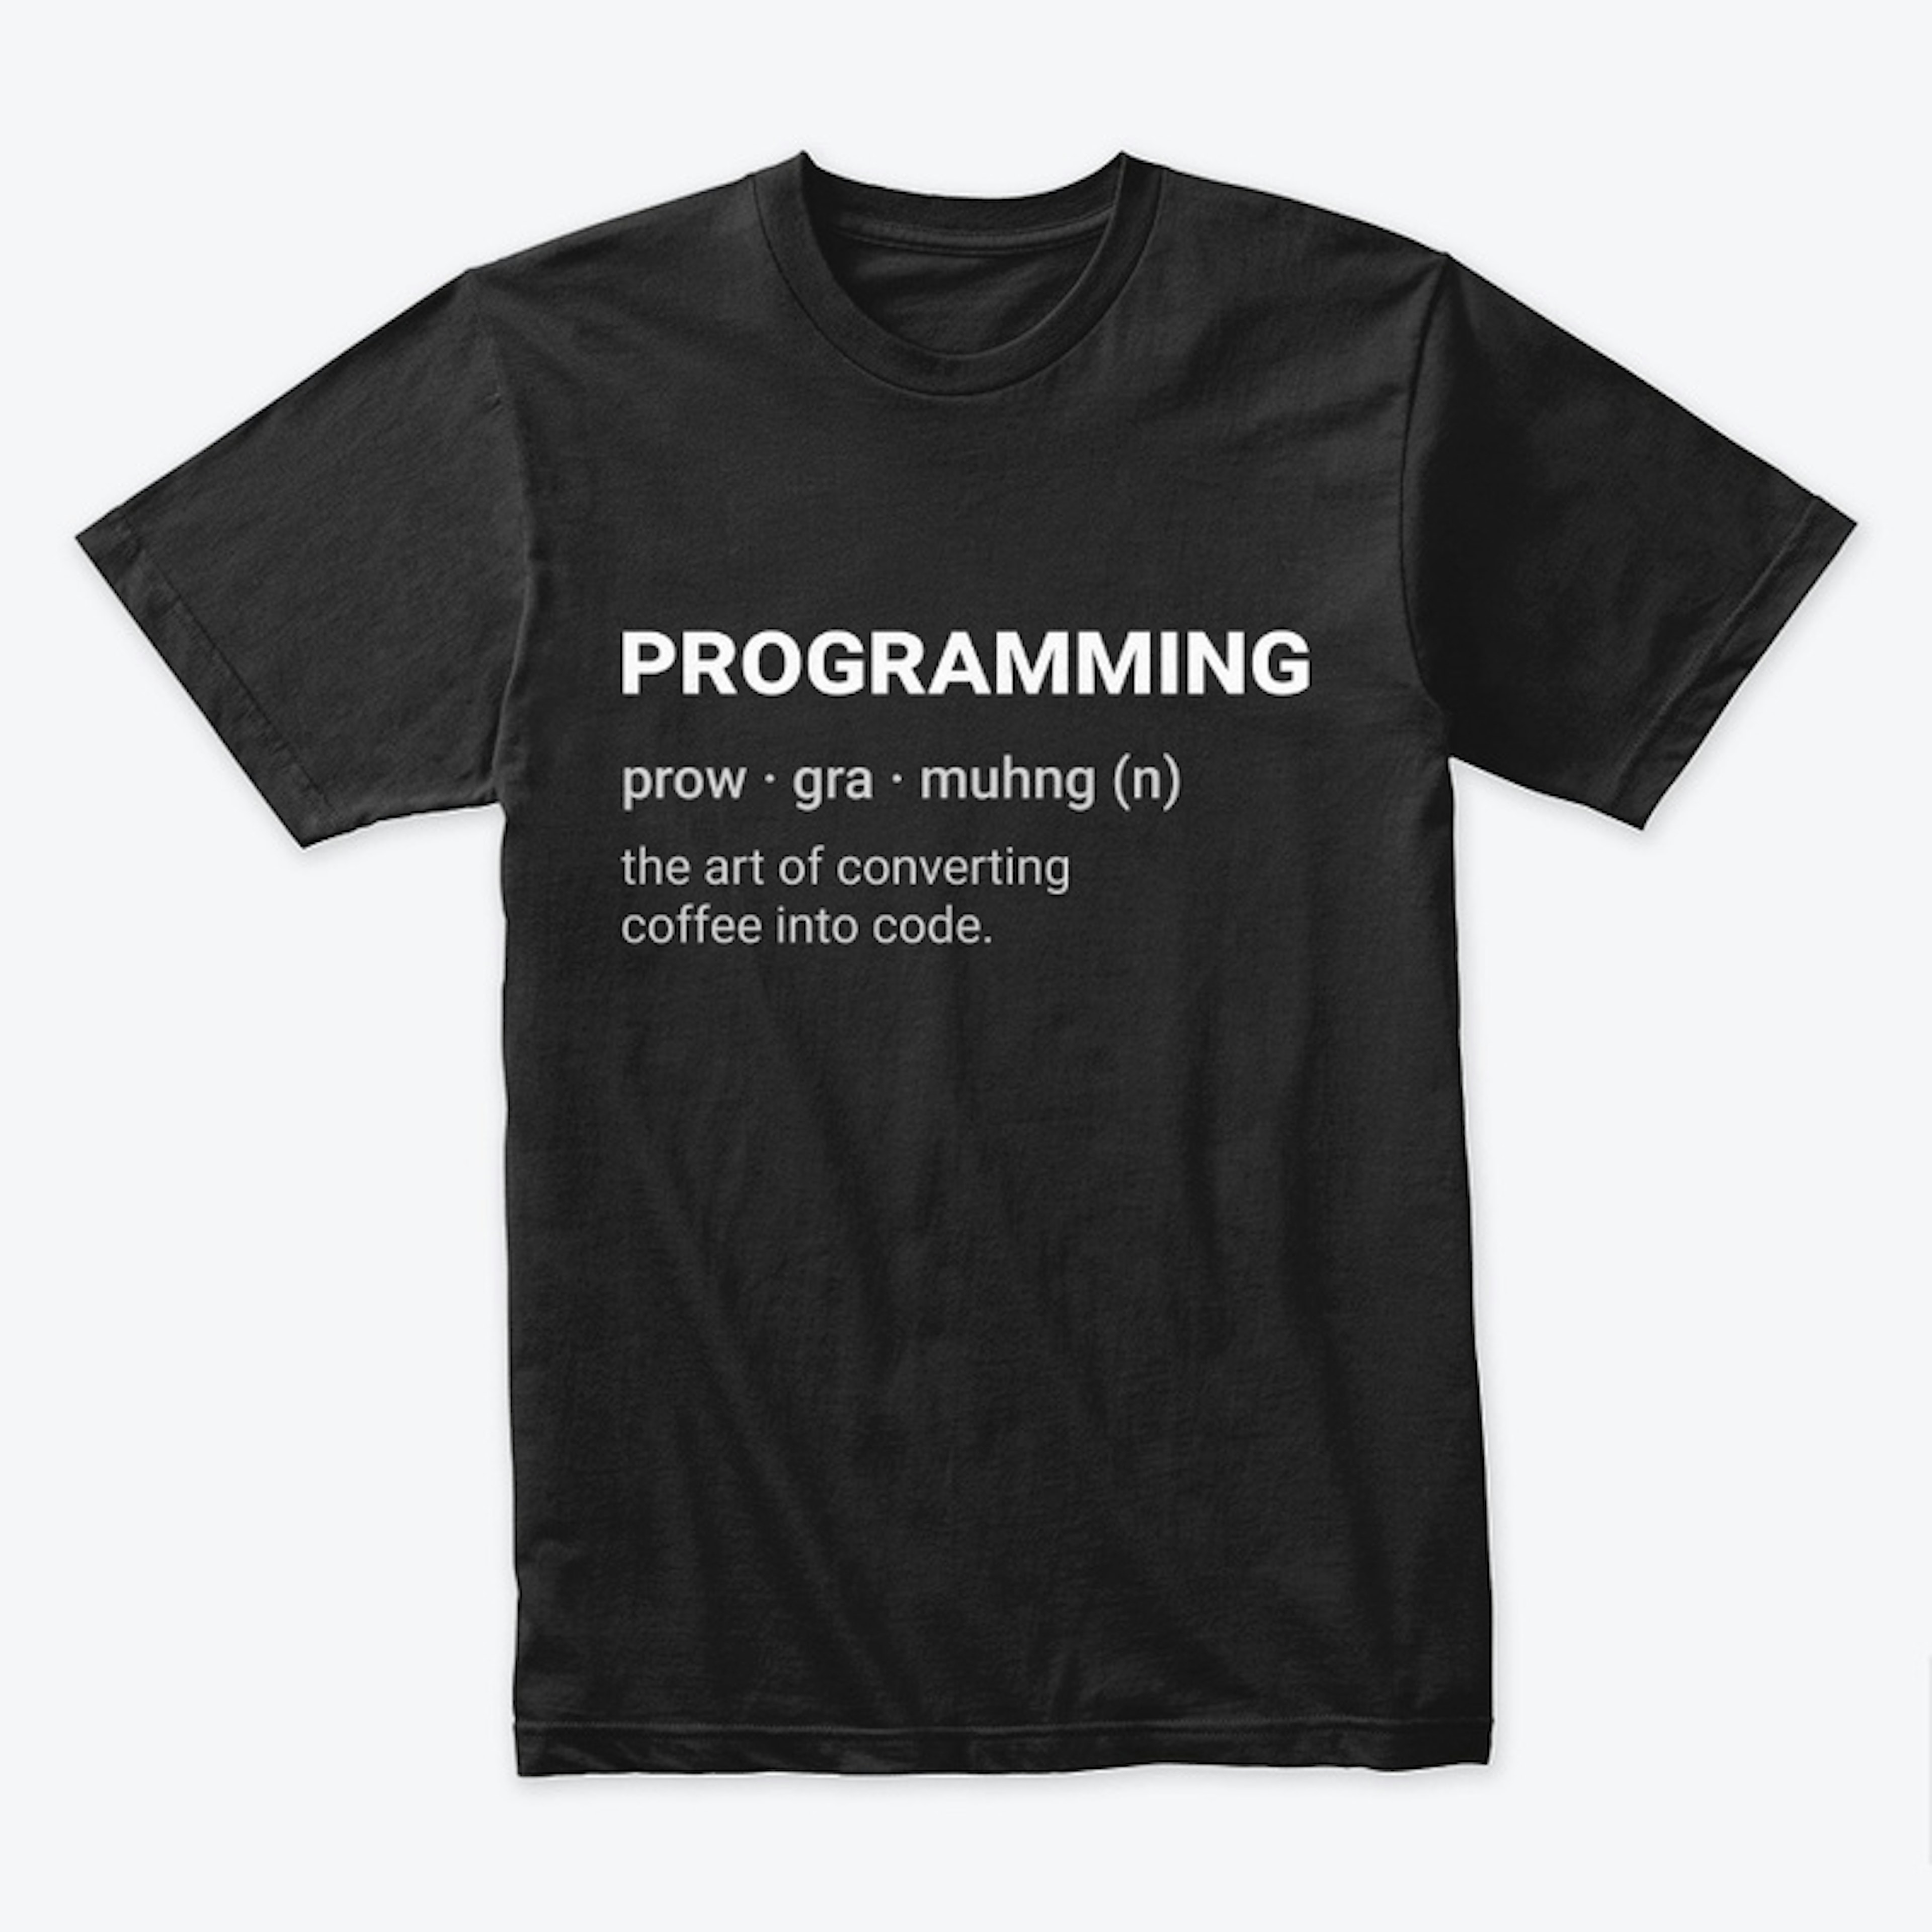 Fun programming definition